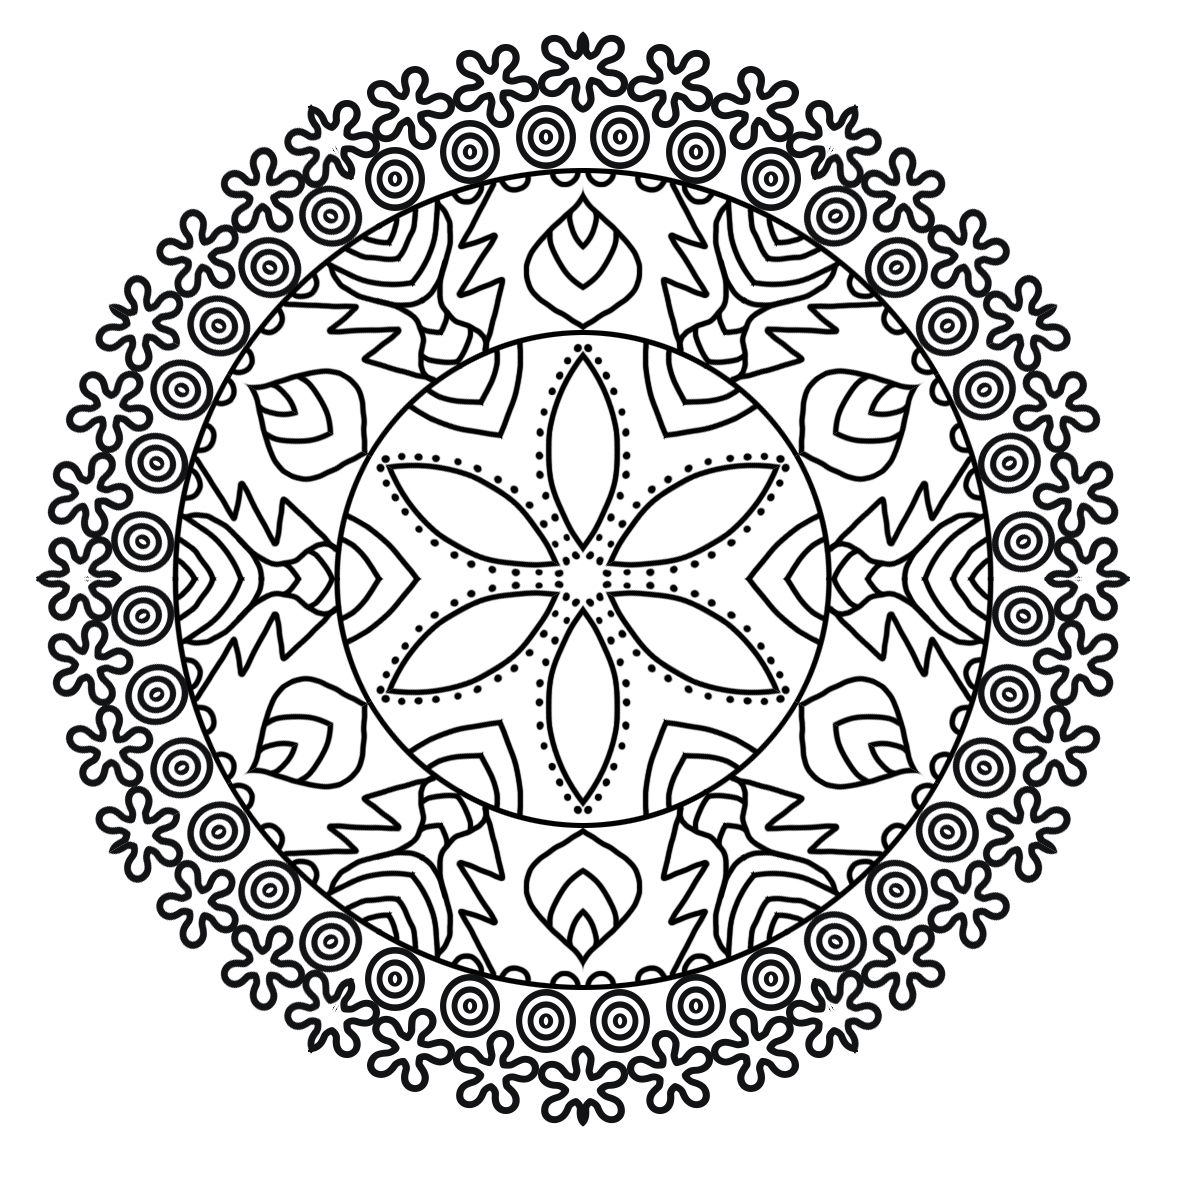 Mandala patterned coloring page